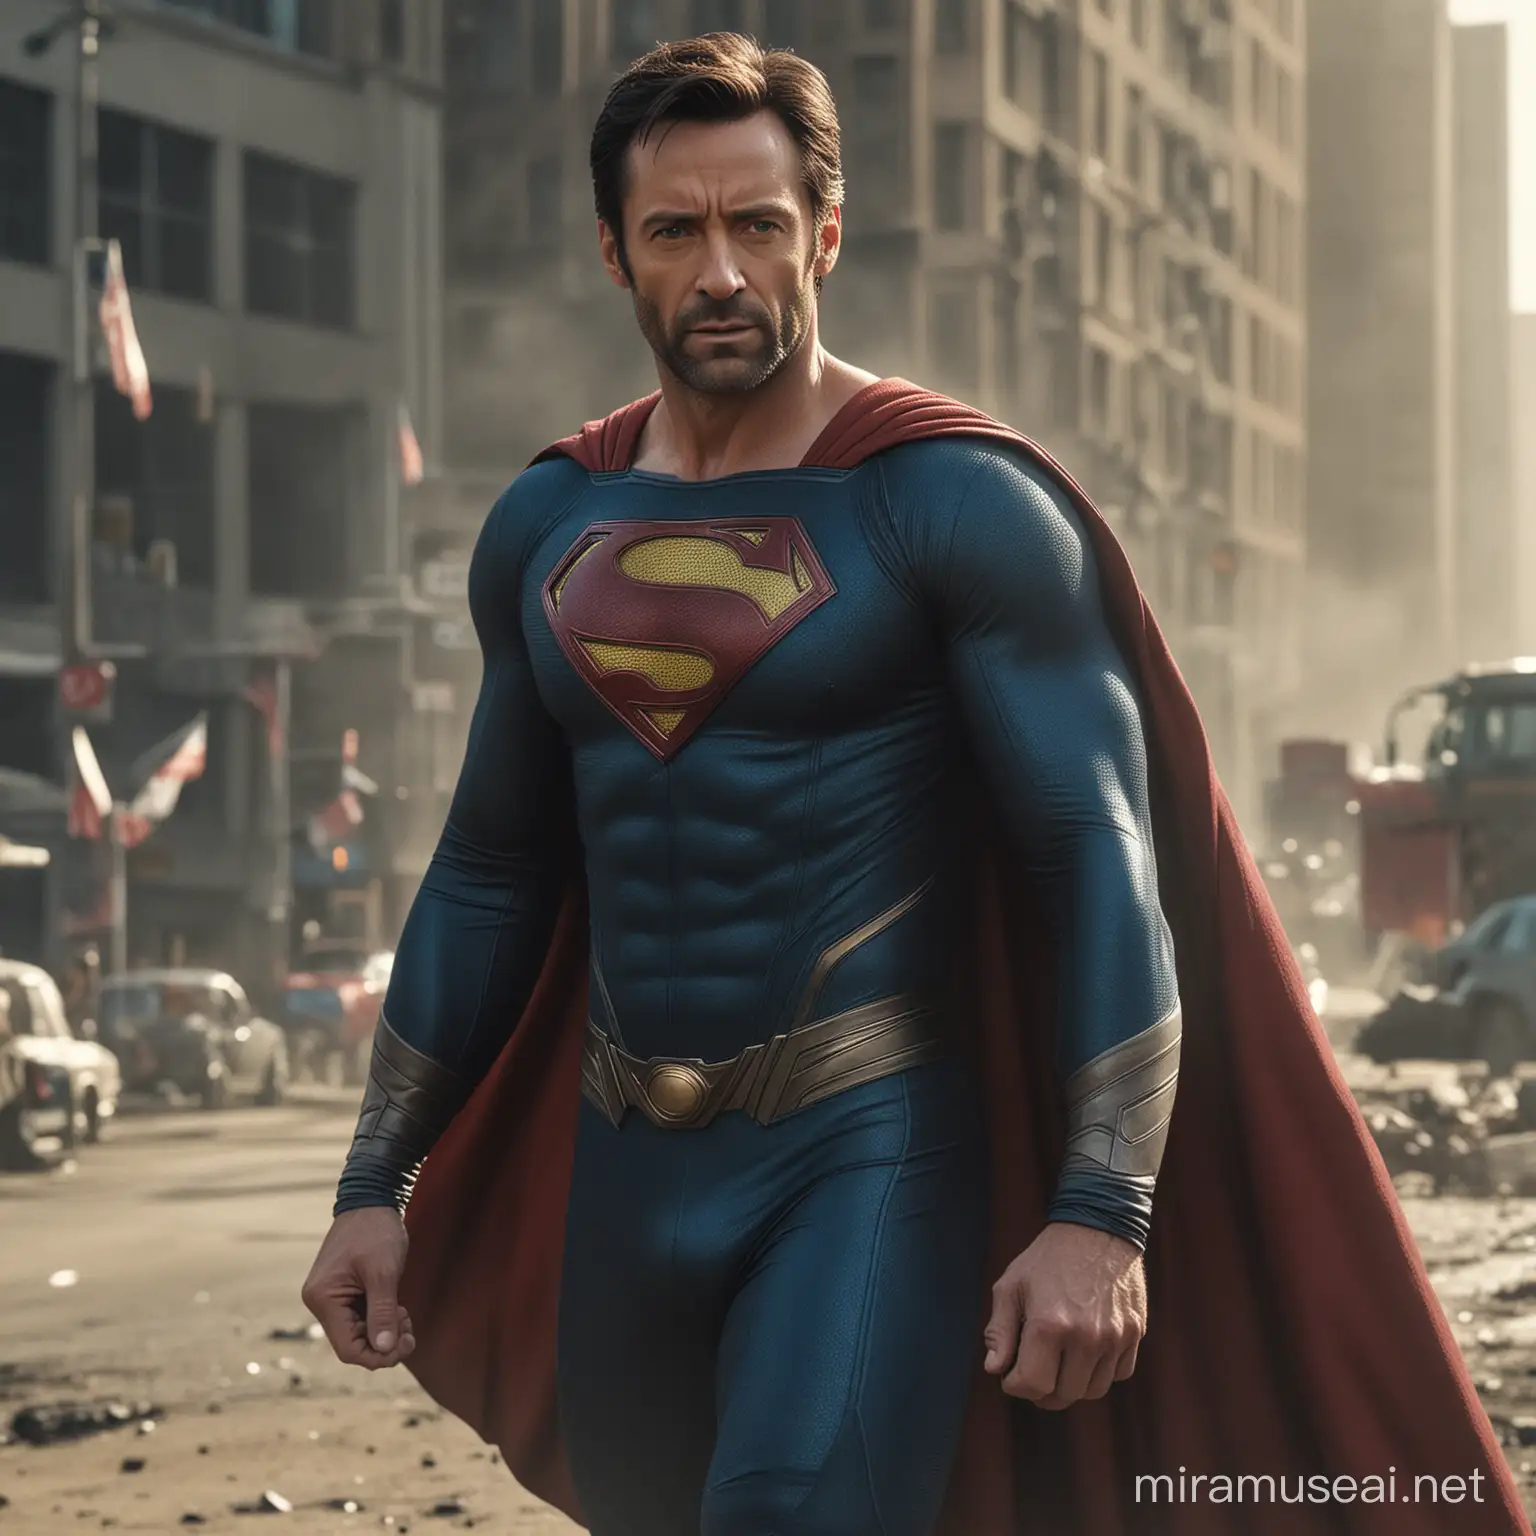 Hugh Jackman dressed as Superman, cinematic, 8k